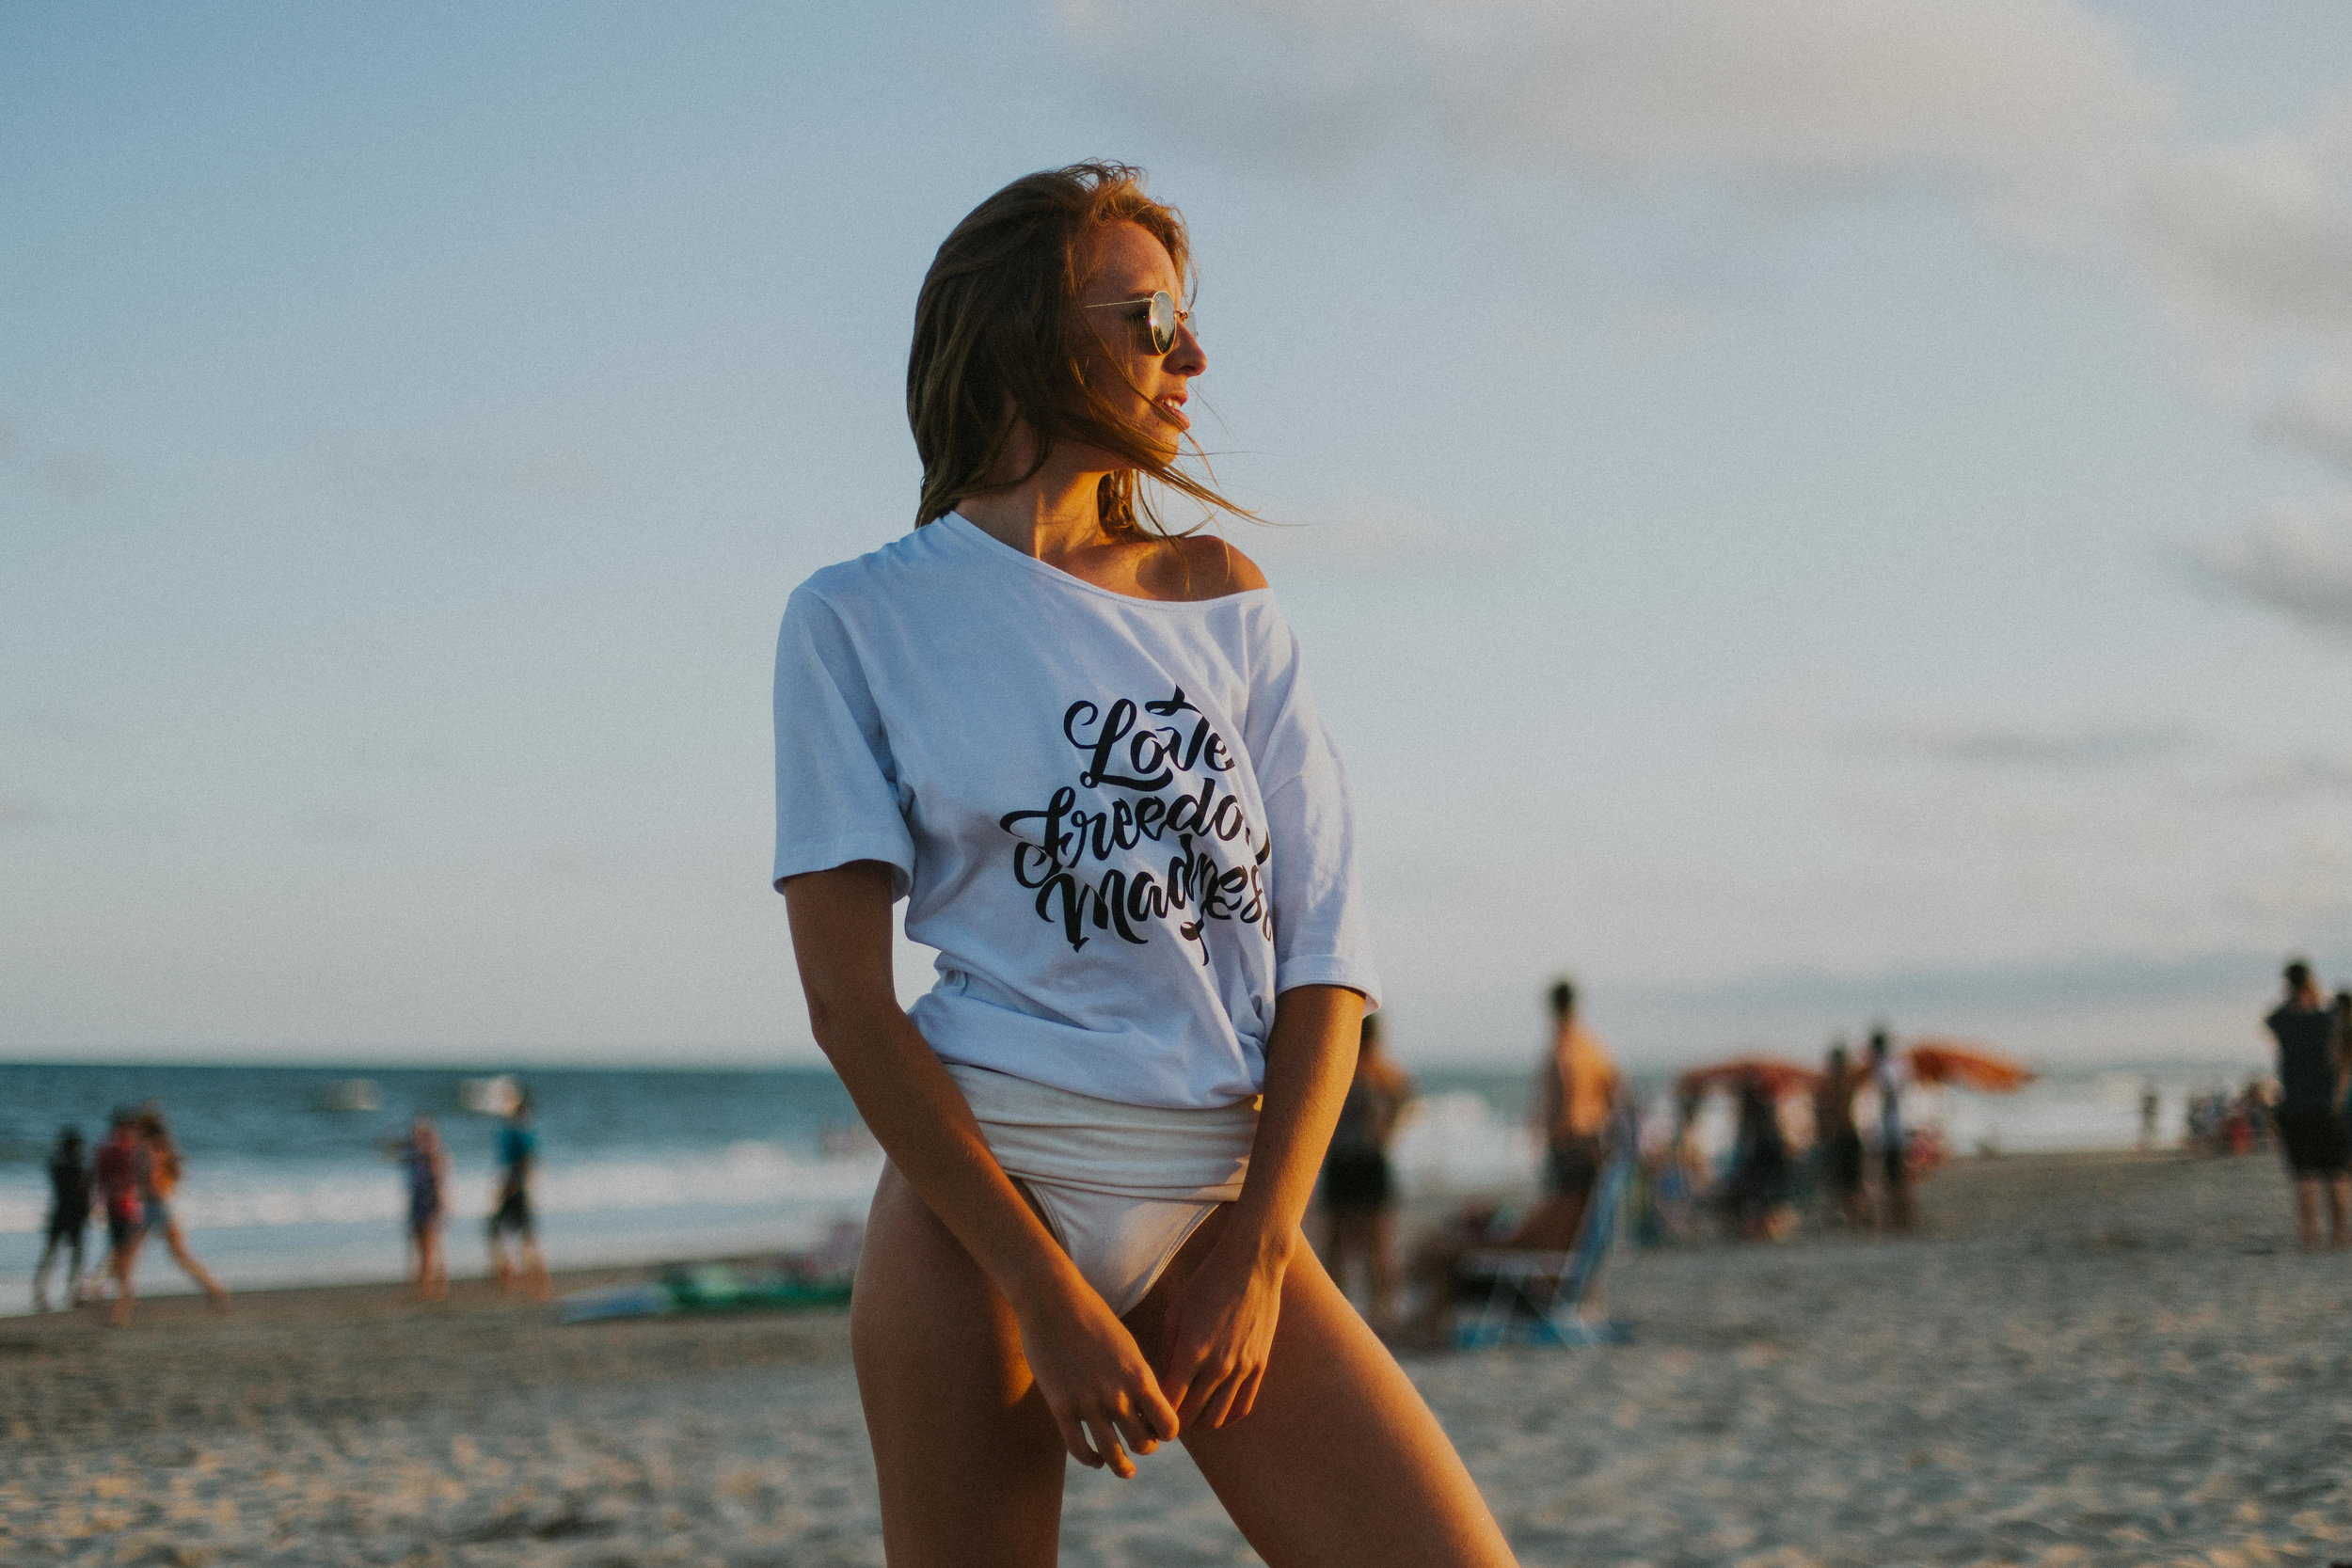 Gaby-Braun-Love-Freedom-Madness-Model-Brazil-t-shirt-beach-praia-ensaio-campanha-fotos-na-praia-ricardo-franzen-9.jpg